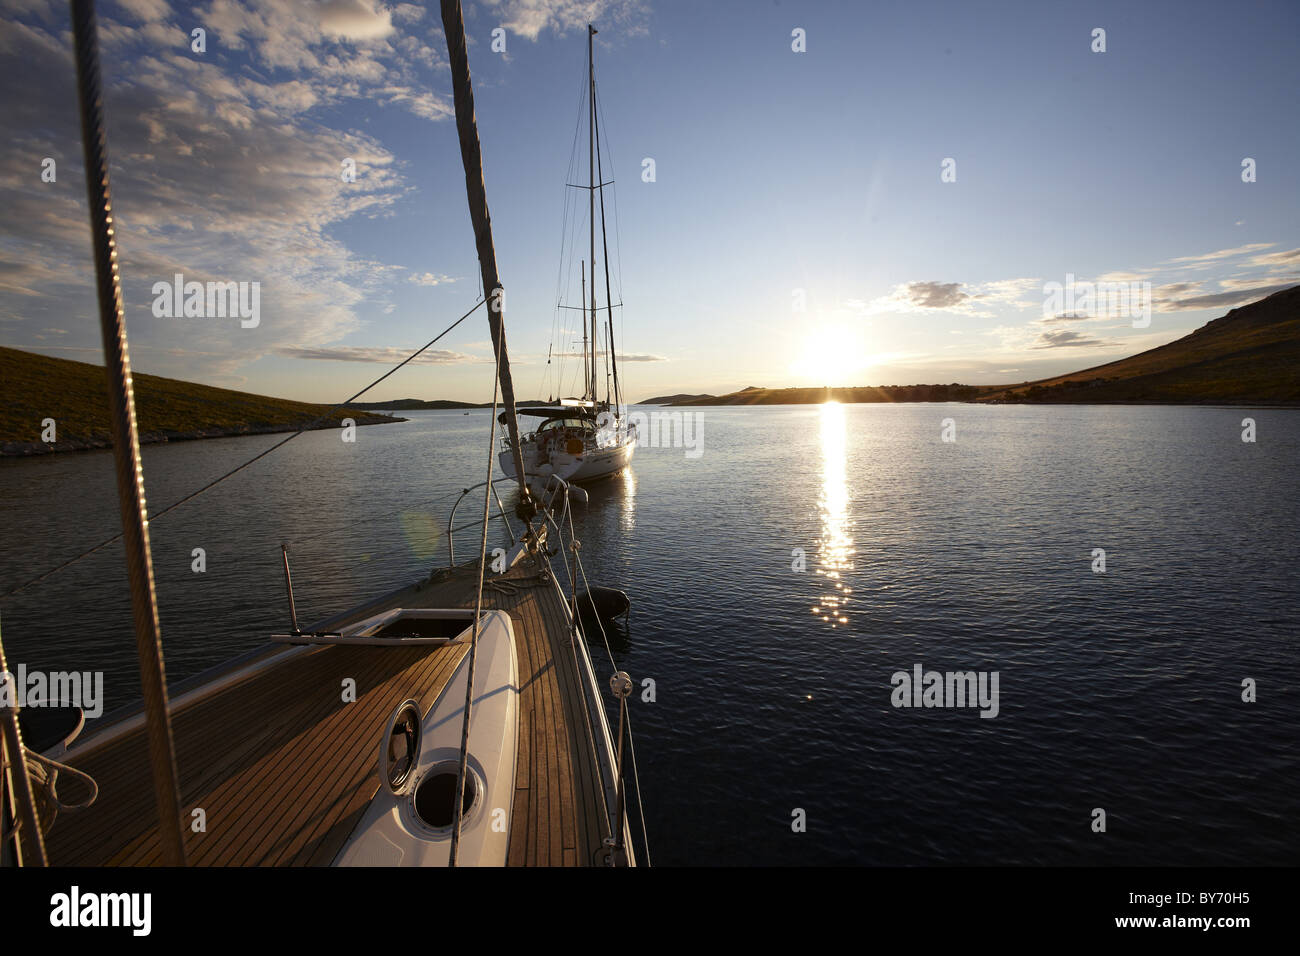 Sailing boat in a bay at sunset, Kornati archipelago, Croatia, Europe Stock Photo